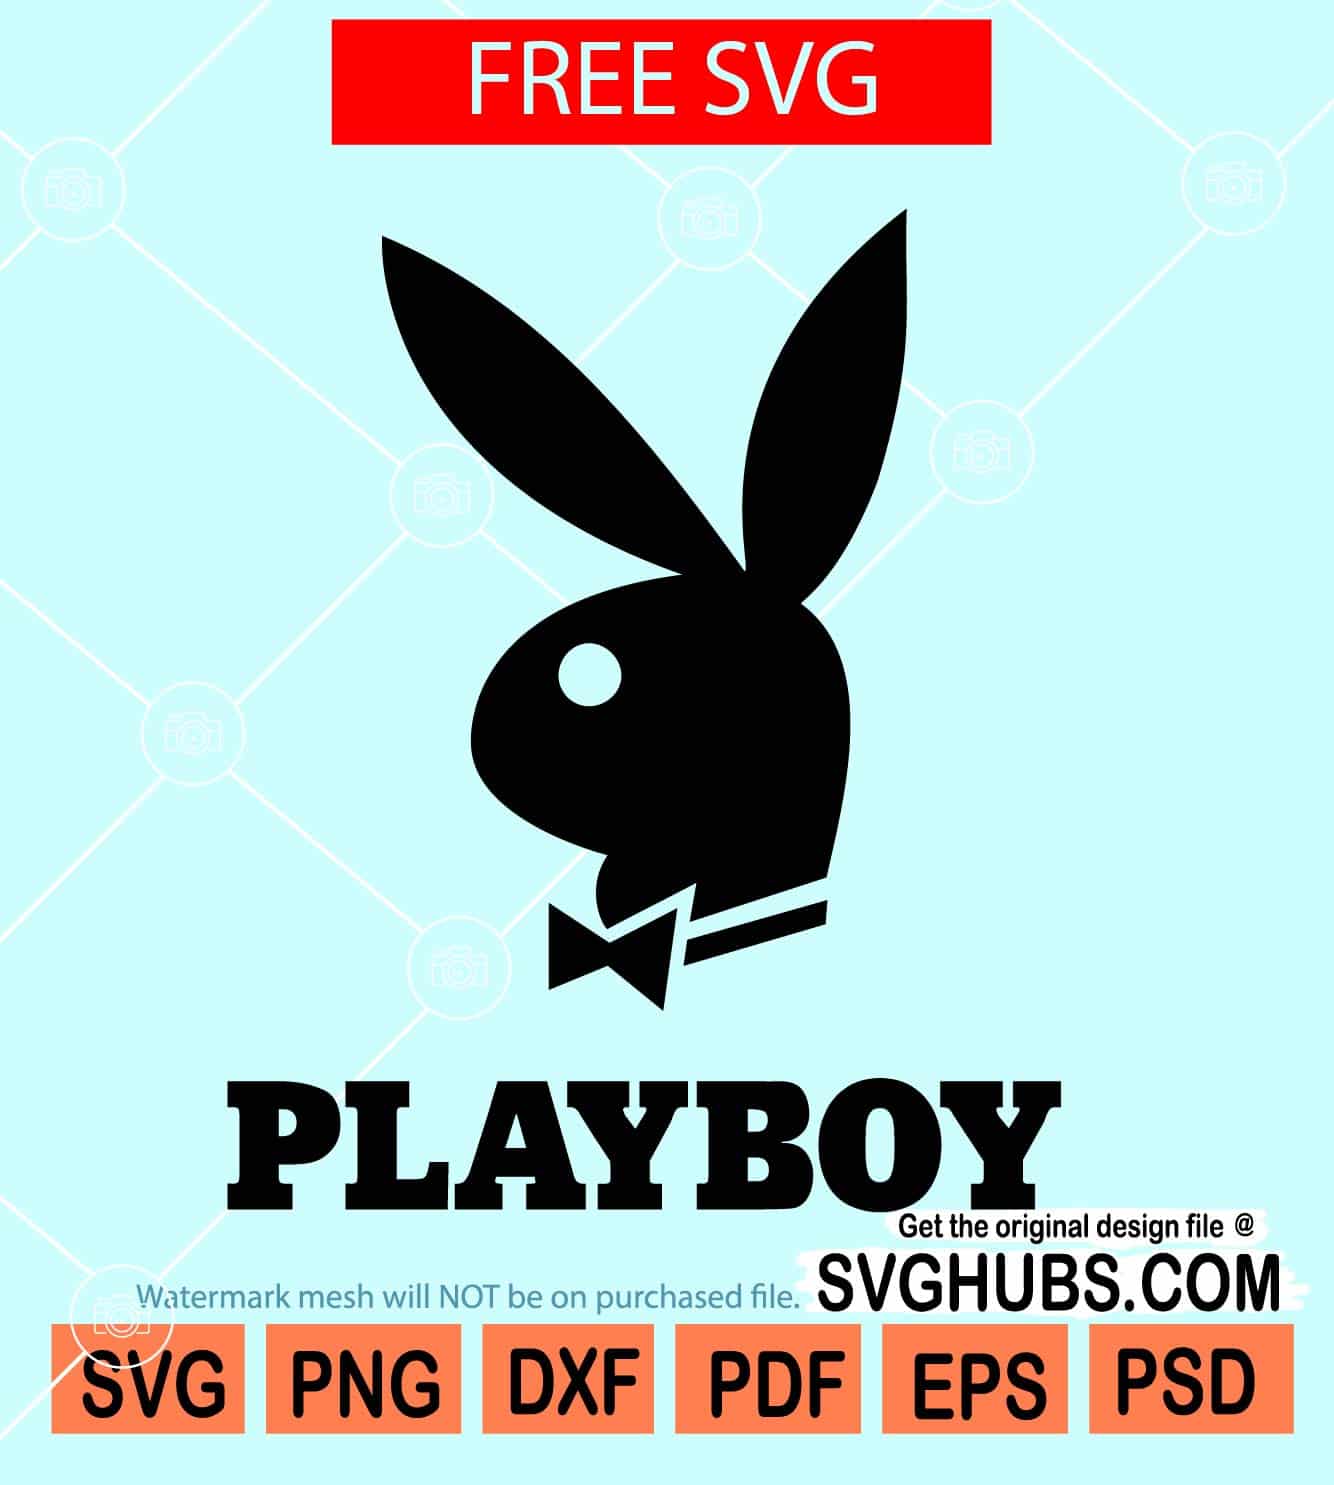 Playboy magazine template